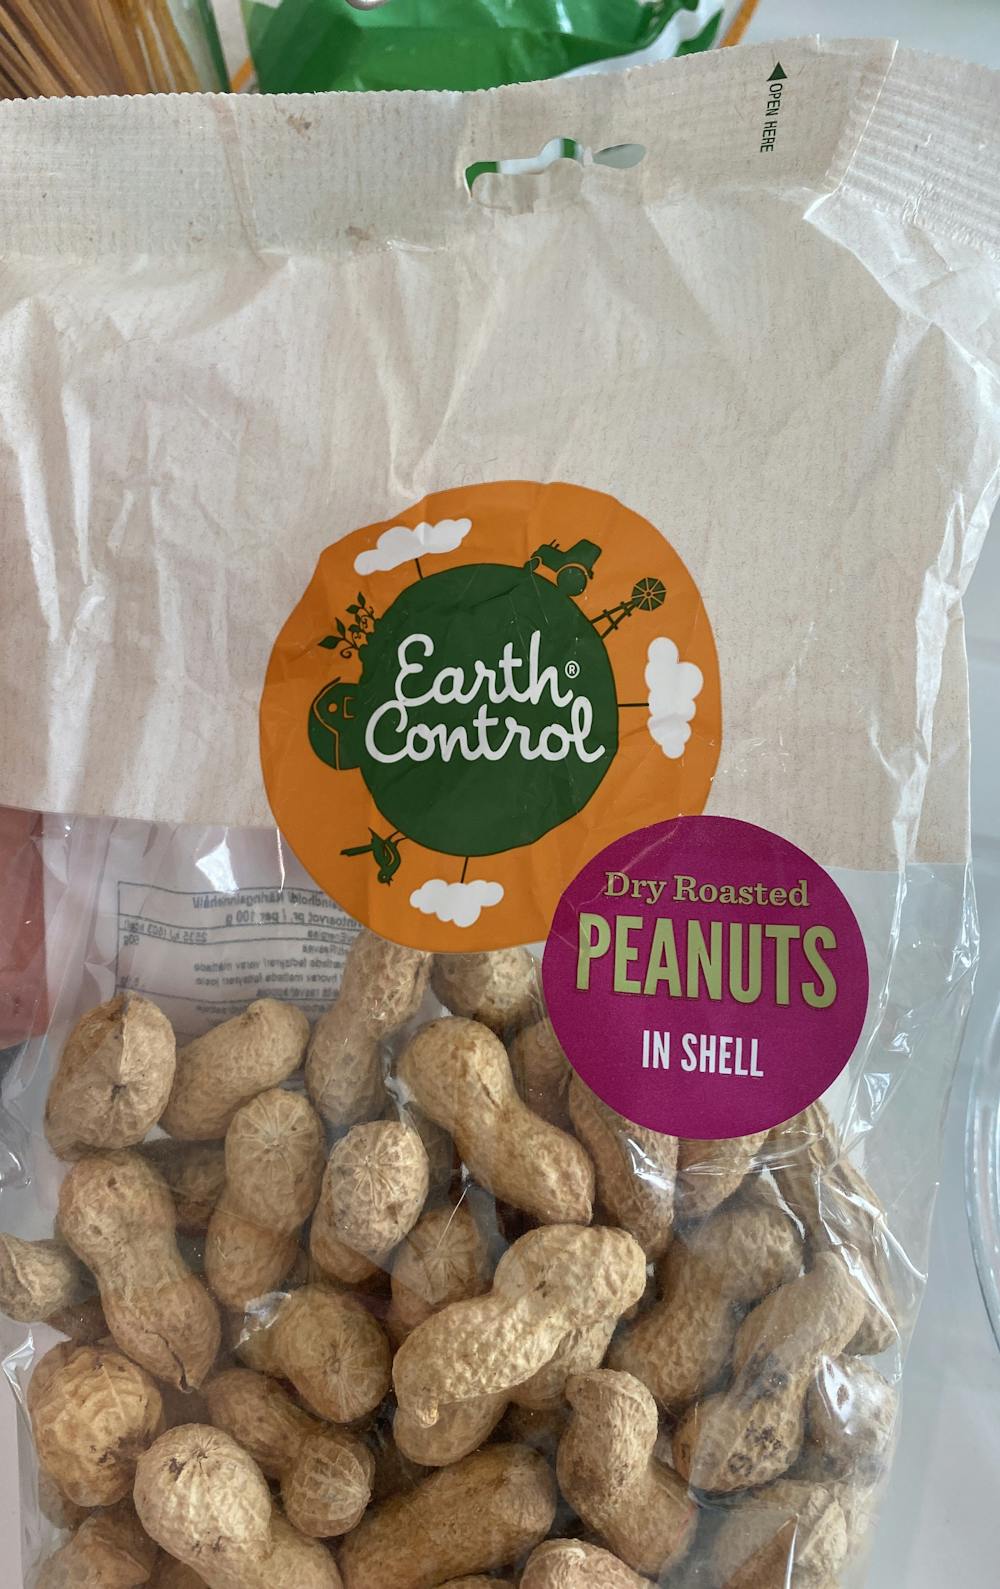 Dry roasted peanuts, Earth control